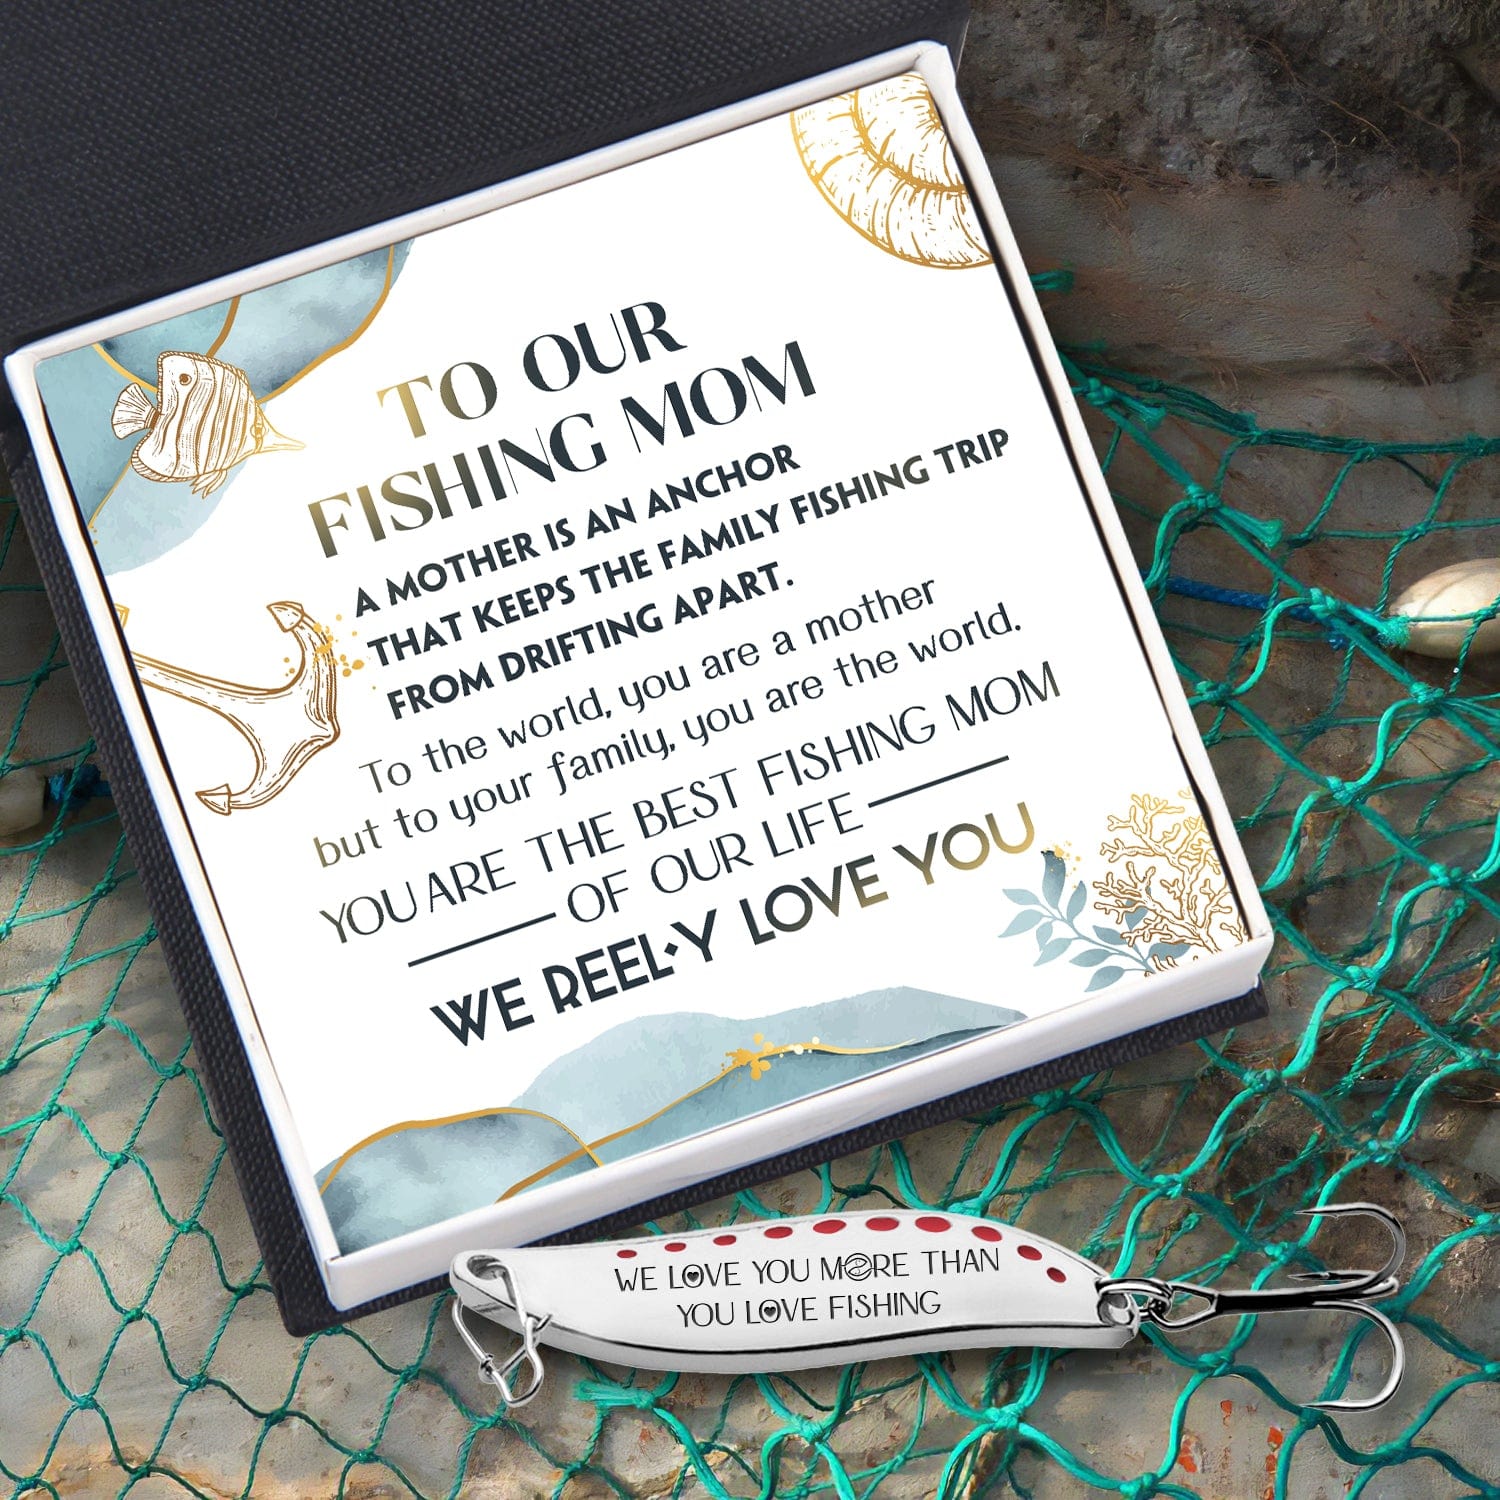 Fishing Spoon Lure - Fishing - To Our Mom - We Reel-y Love You - Gfaa19003